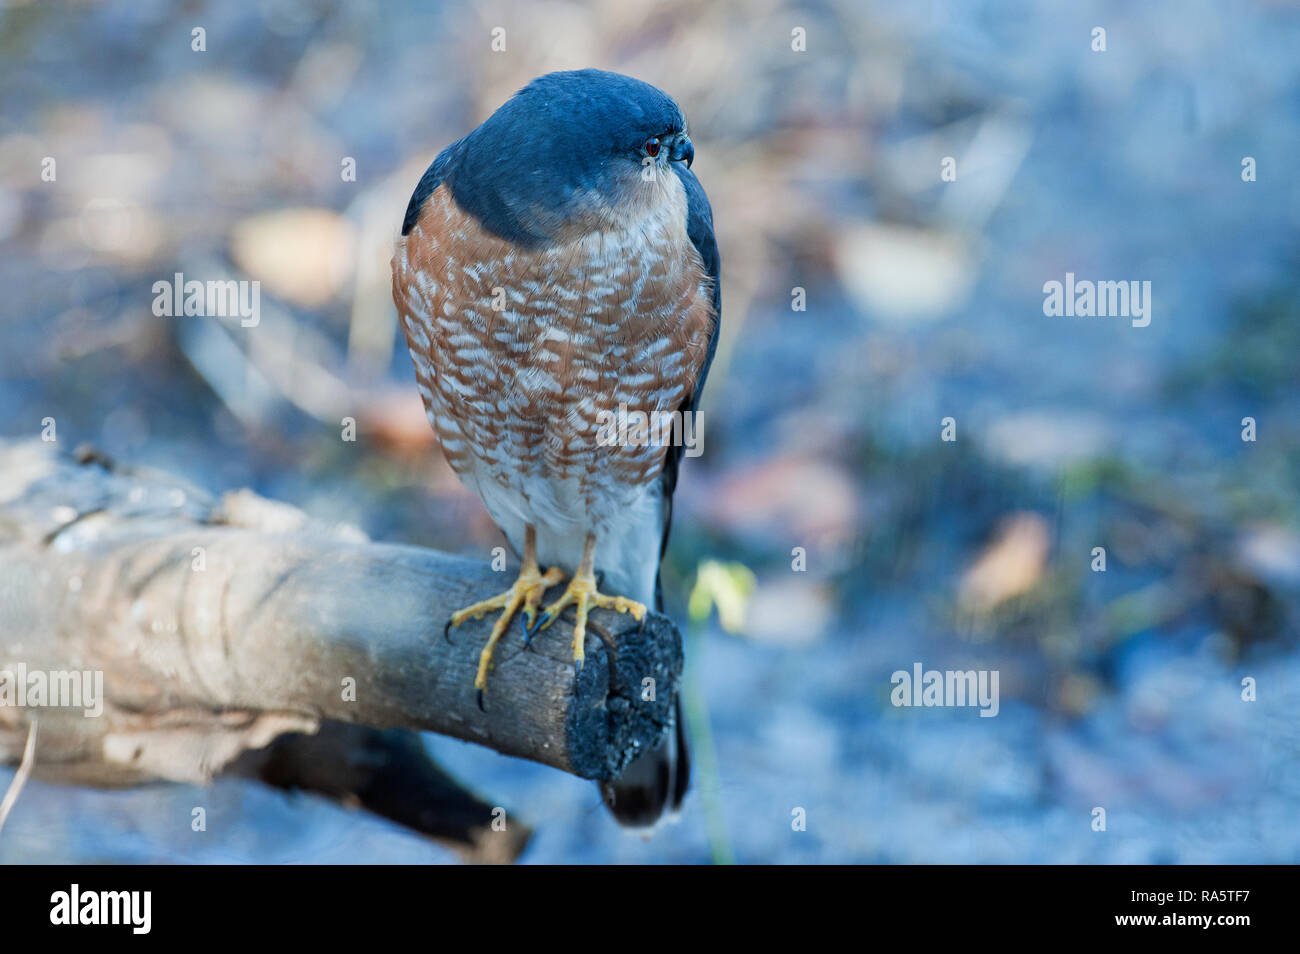 Adult sharp-shinned hawk portrait up close Stock Photo - Alamy